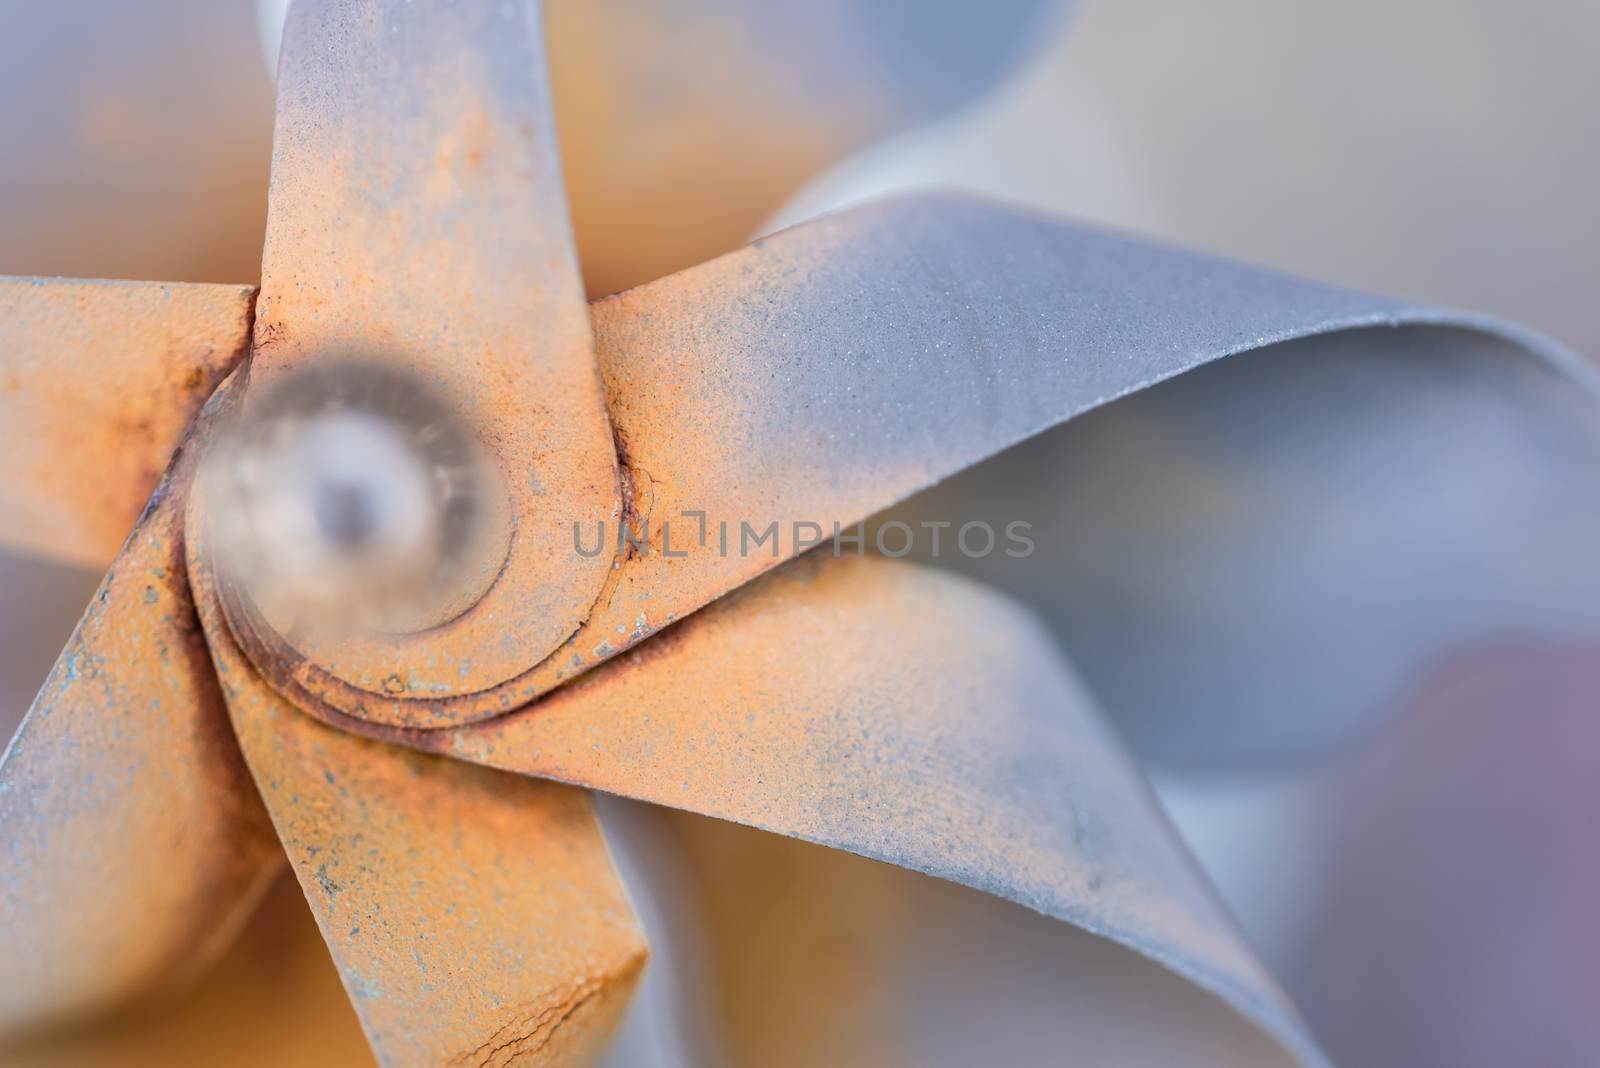 A macro shot of a decorative pinwheel garden ornament made of rusted metal.